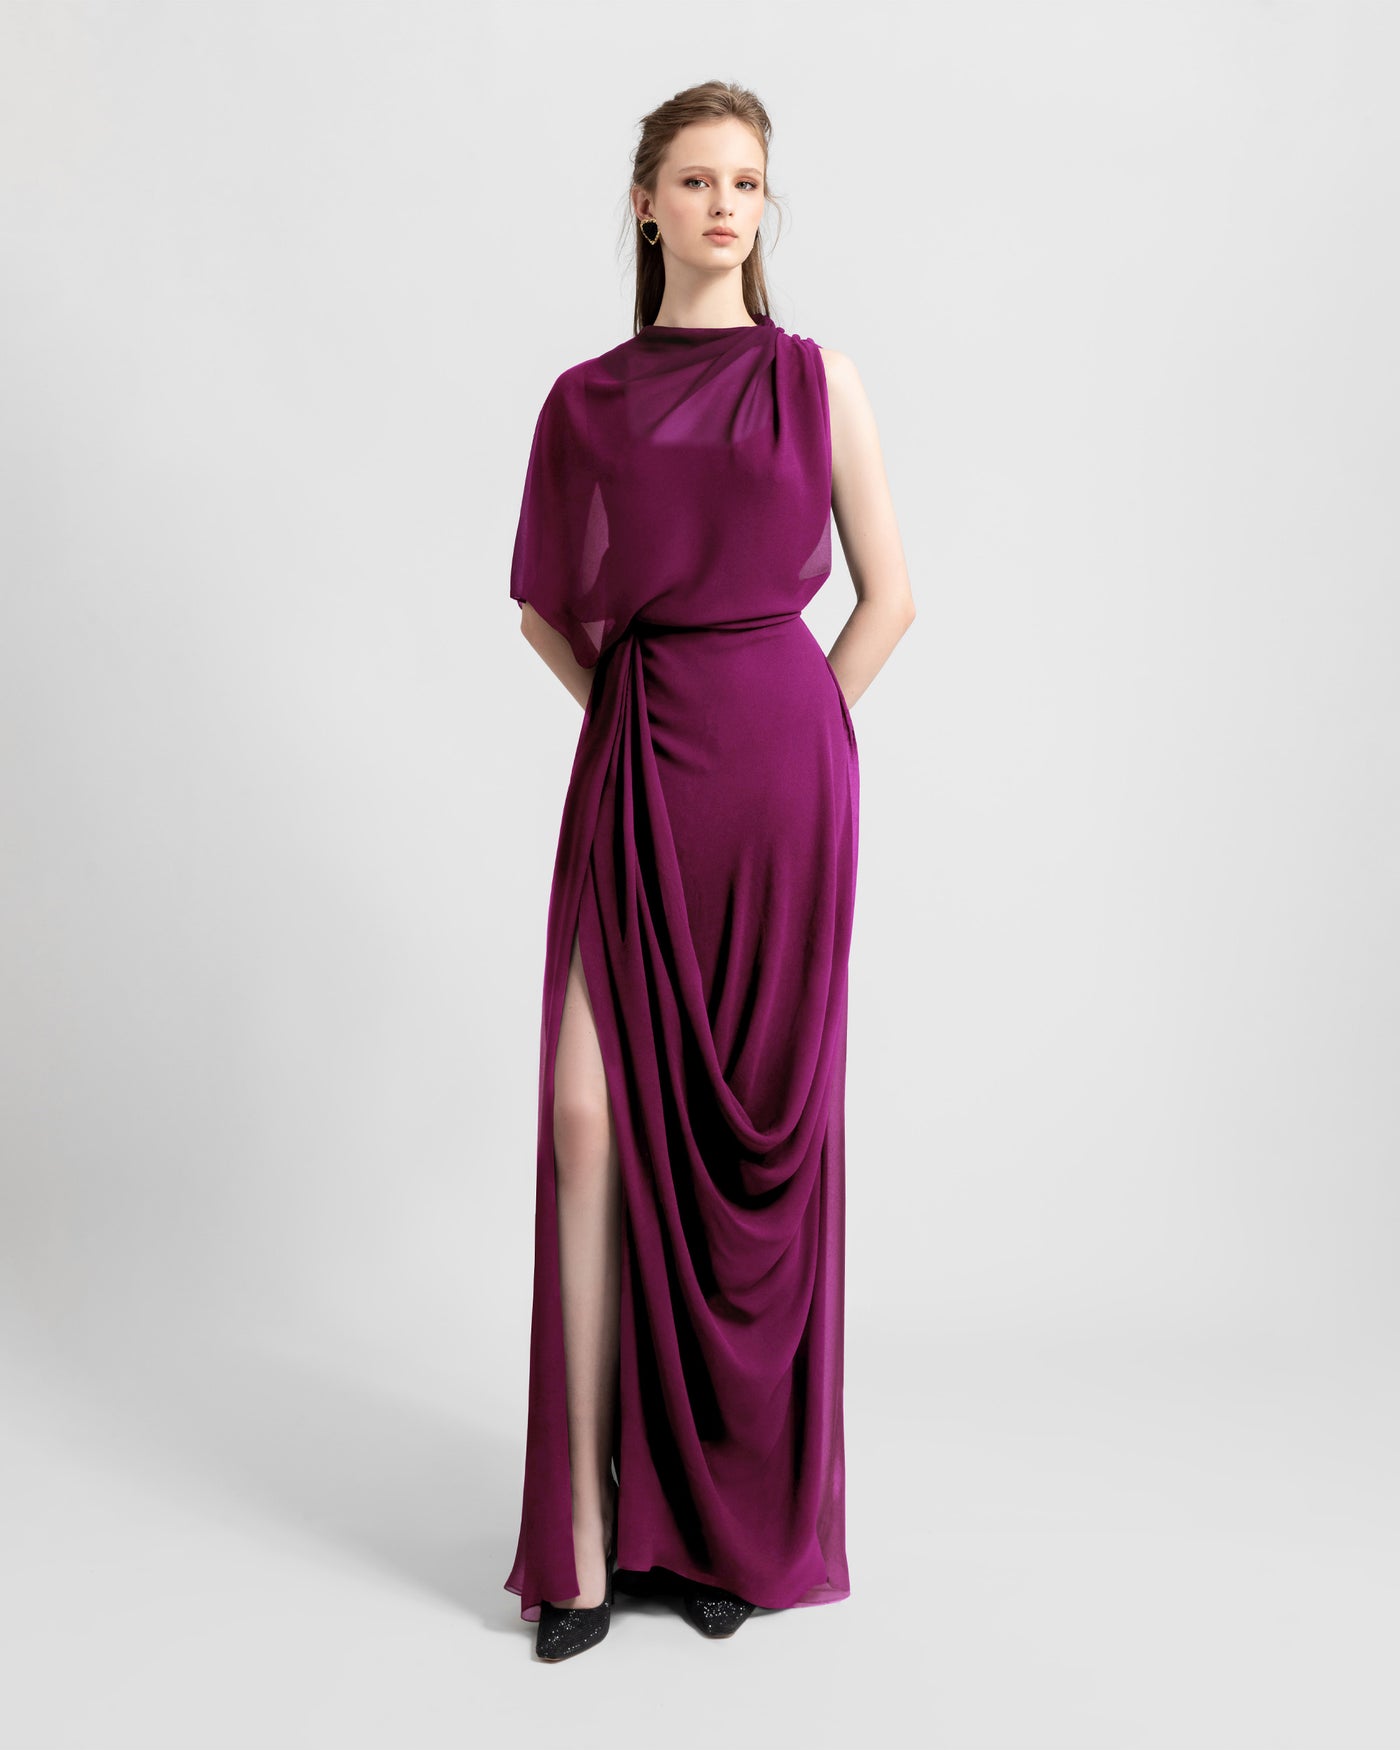 Asymmetrical Draped Burgundy Dress